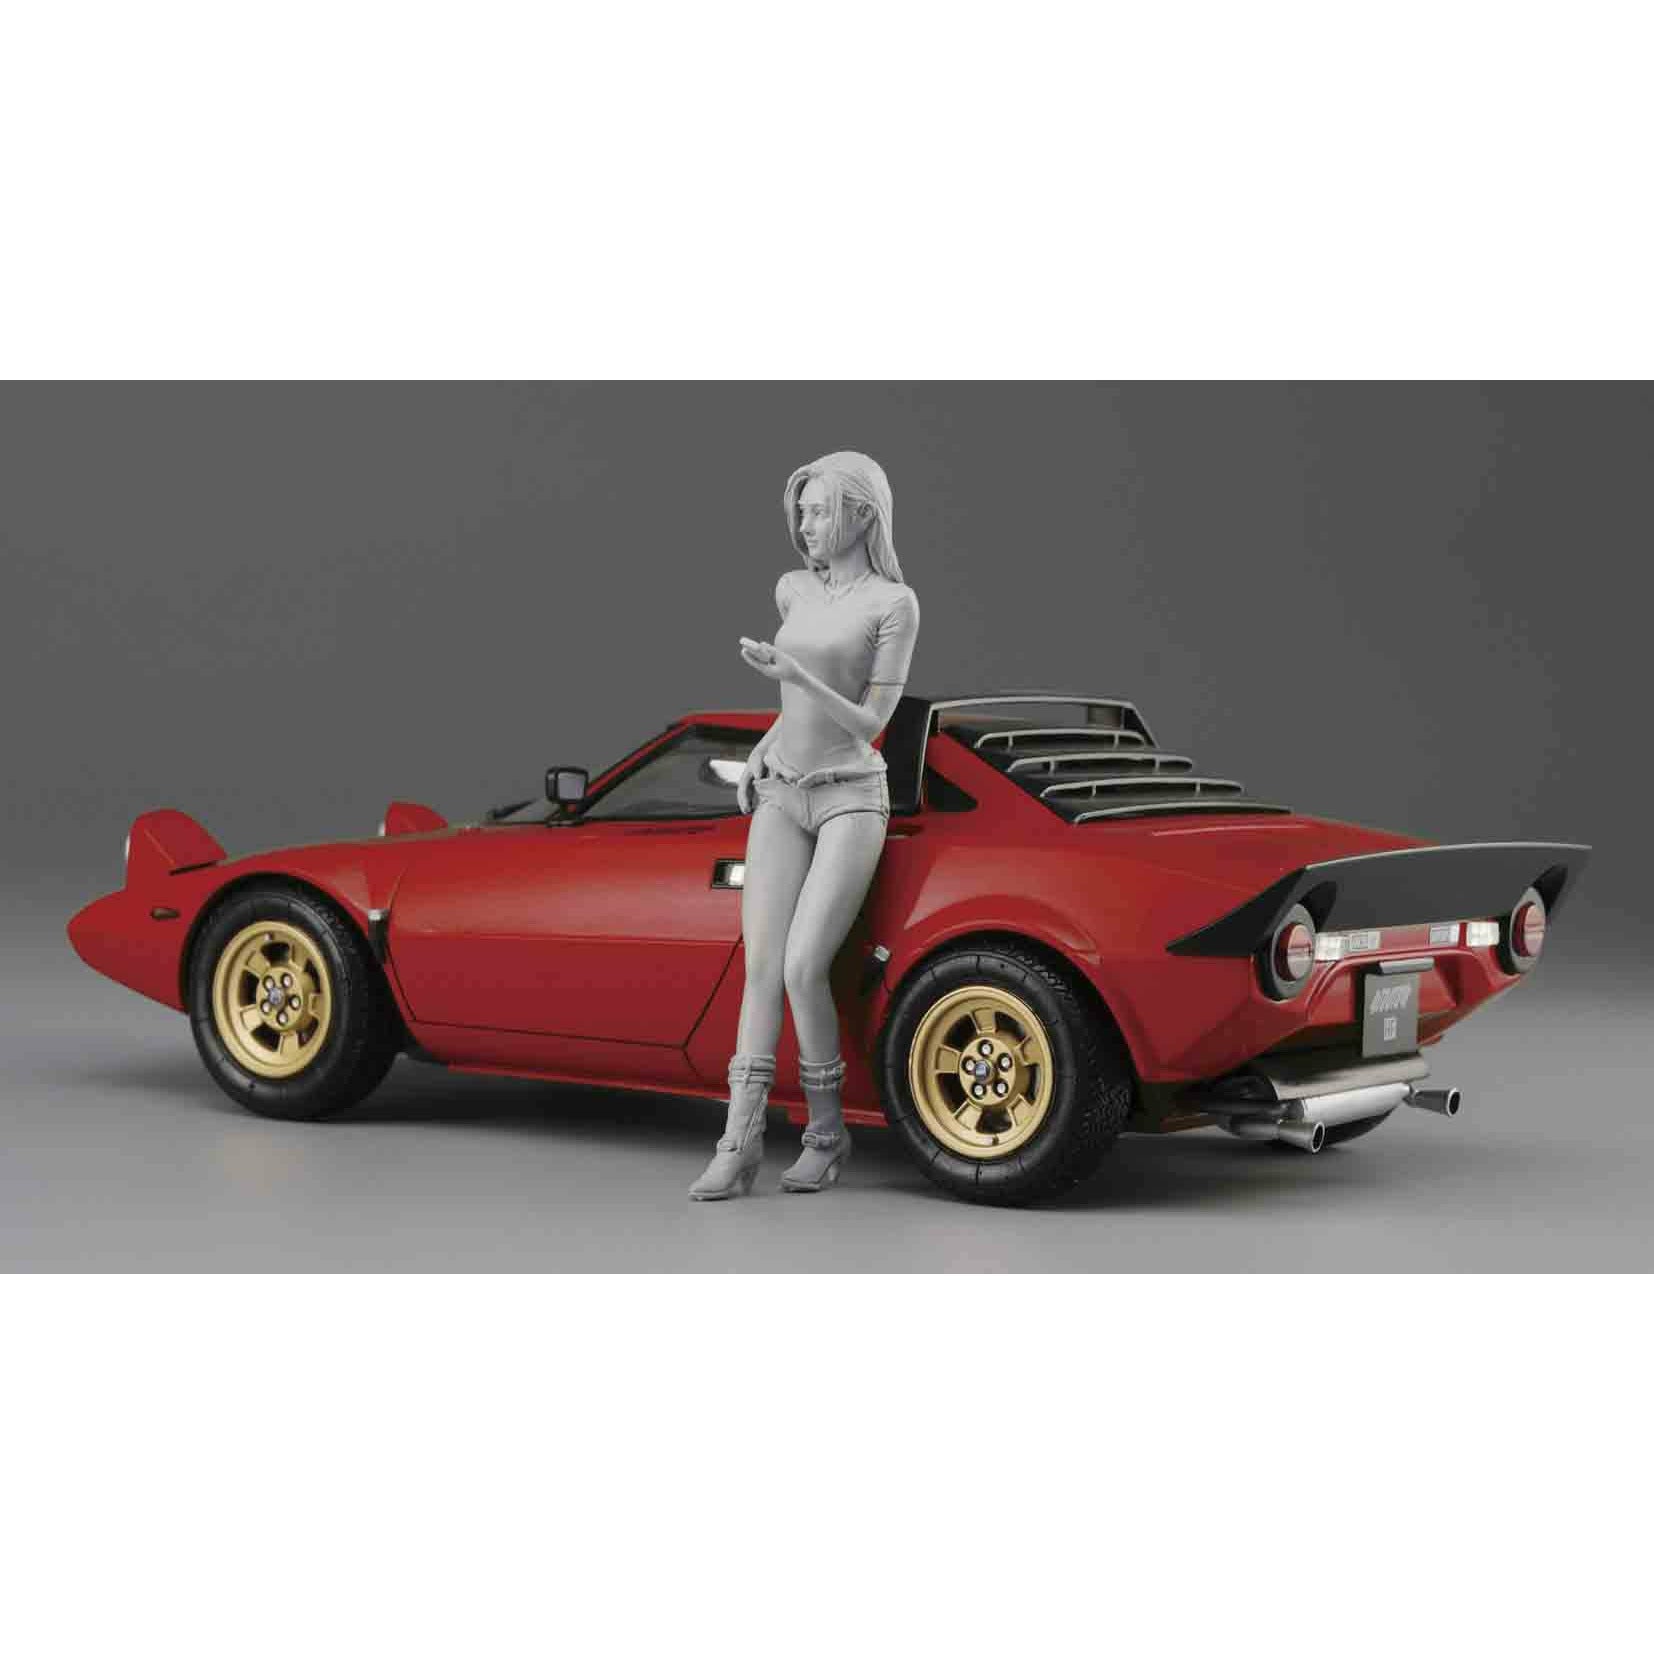 Lancia Stratos HF 'Stradale' W/Italian Girl's Figure 1/24 #20543 by Hasegawa